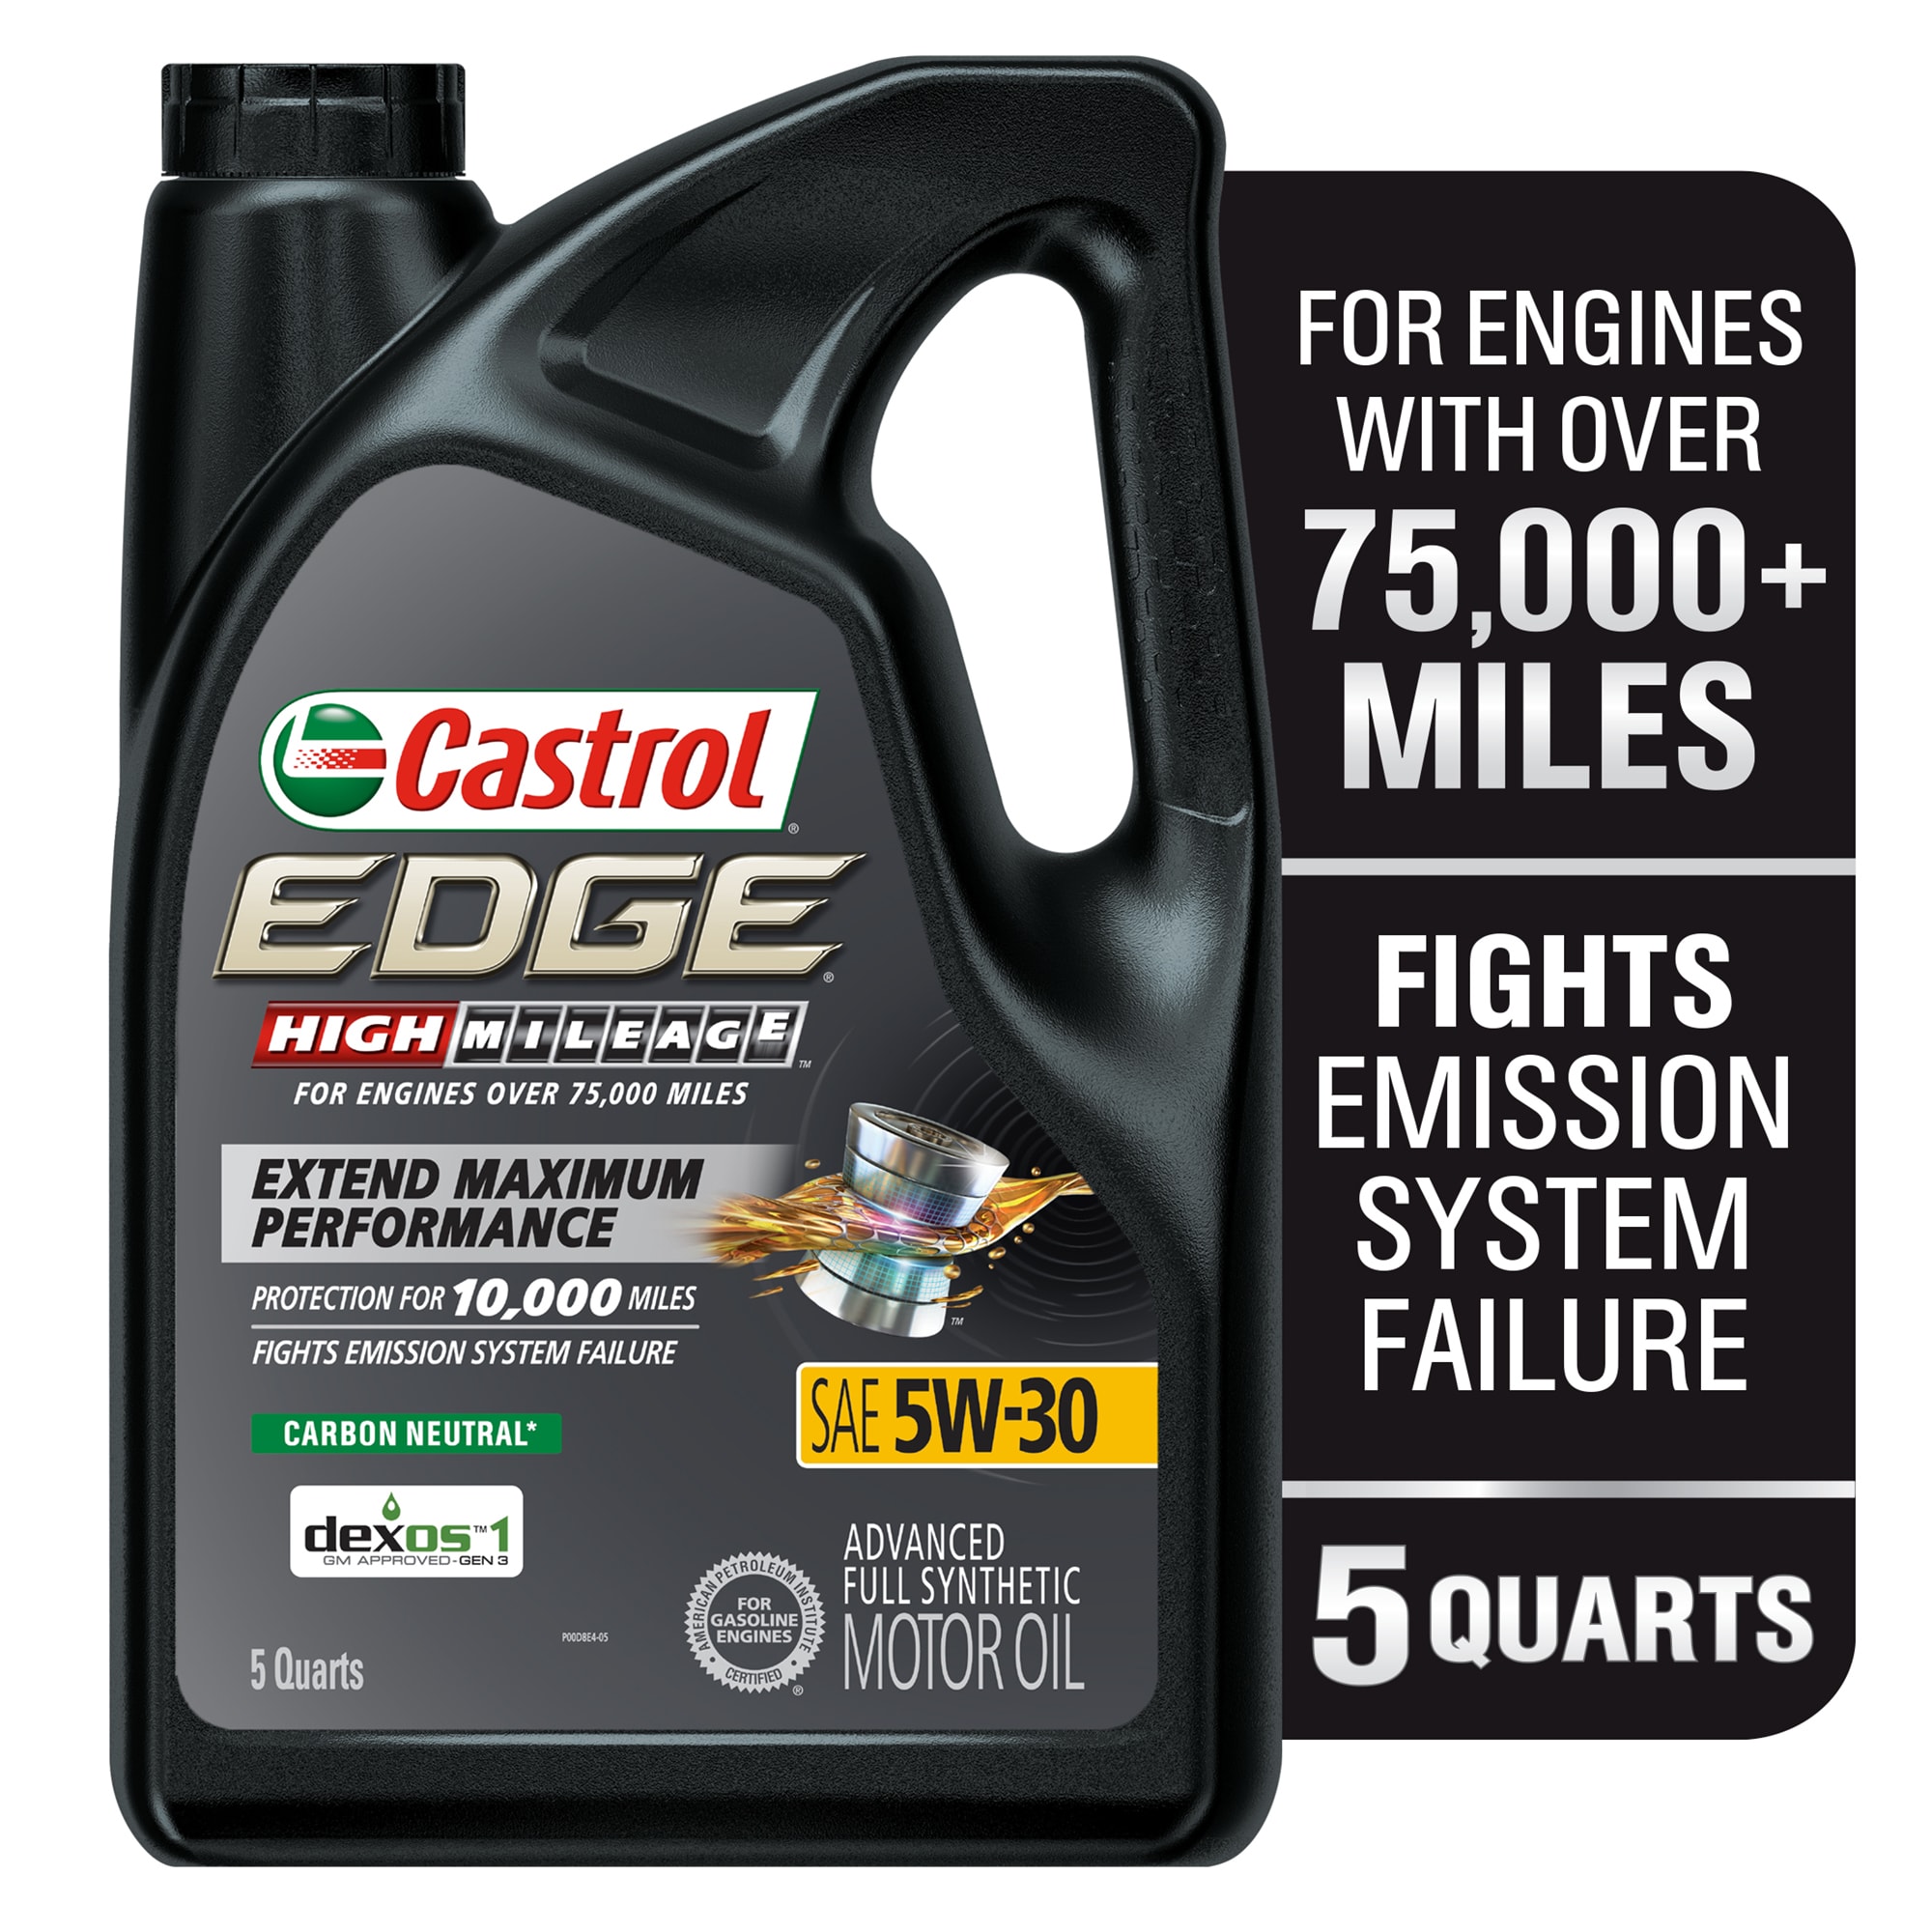 Castrol GTX High Mileage 5W-30 Synthetic Blend Motor Oil, 1 Quart